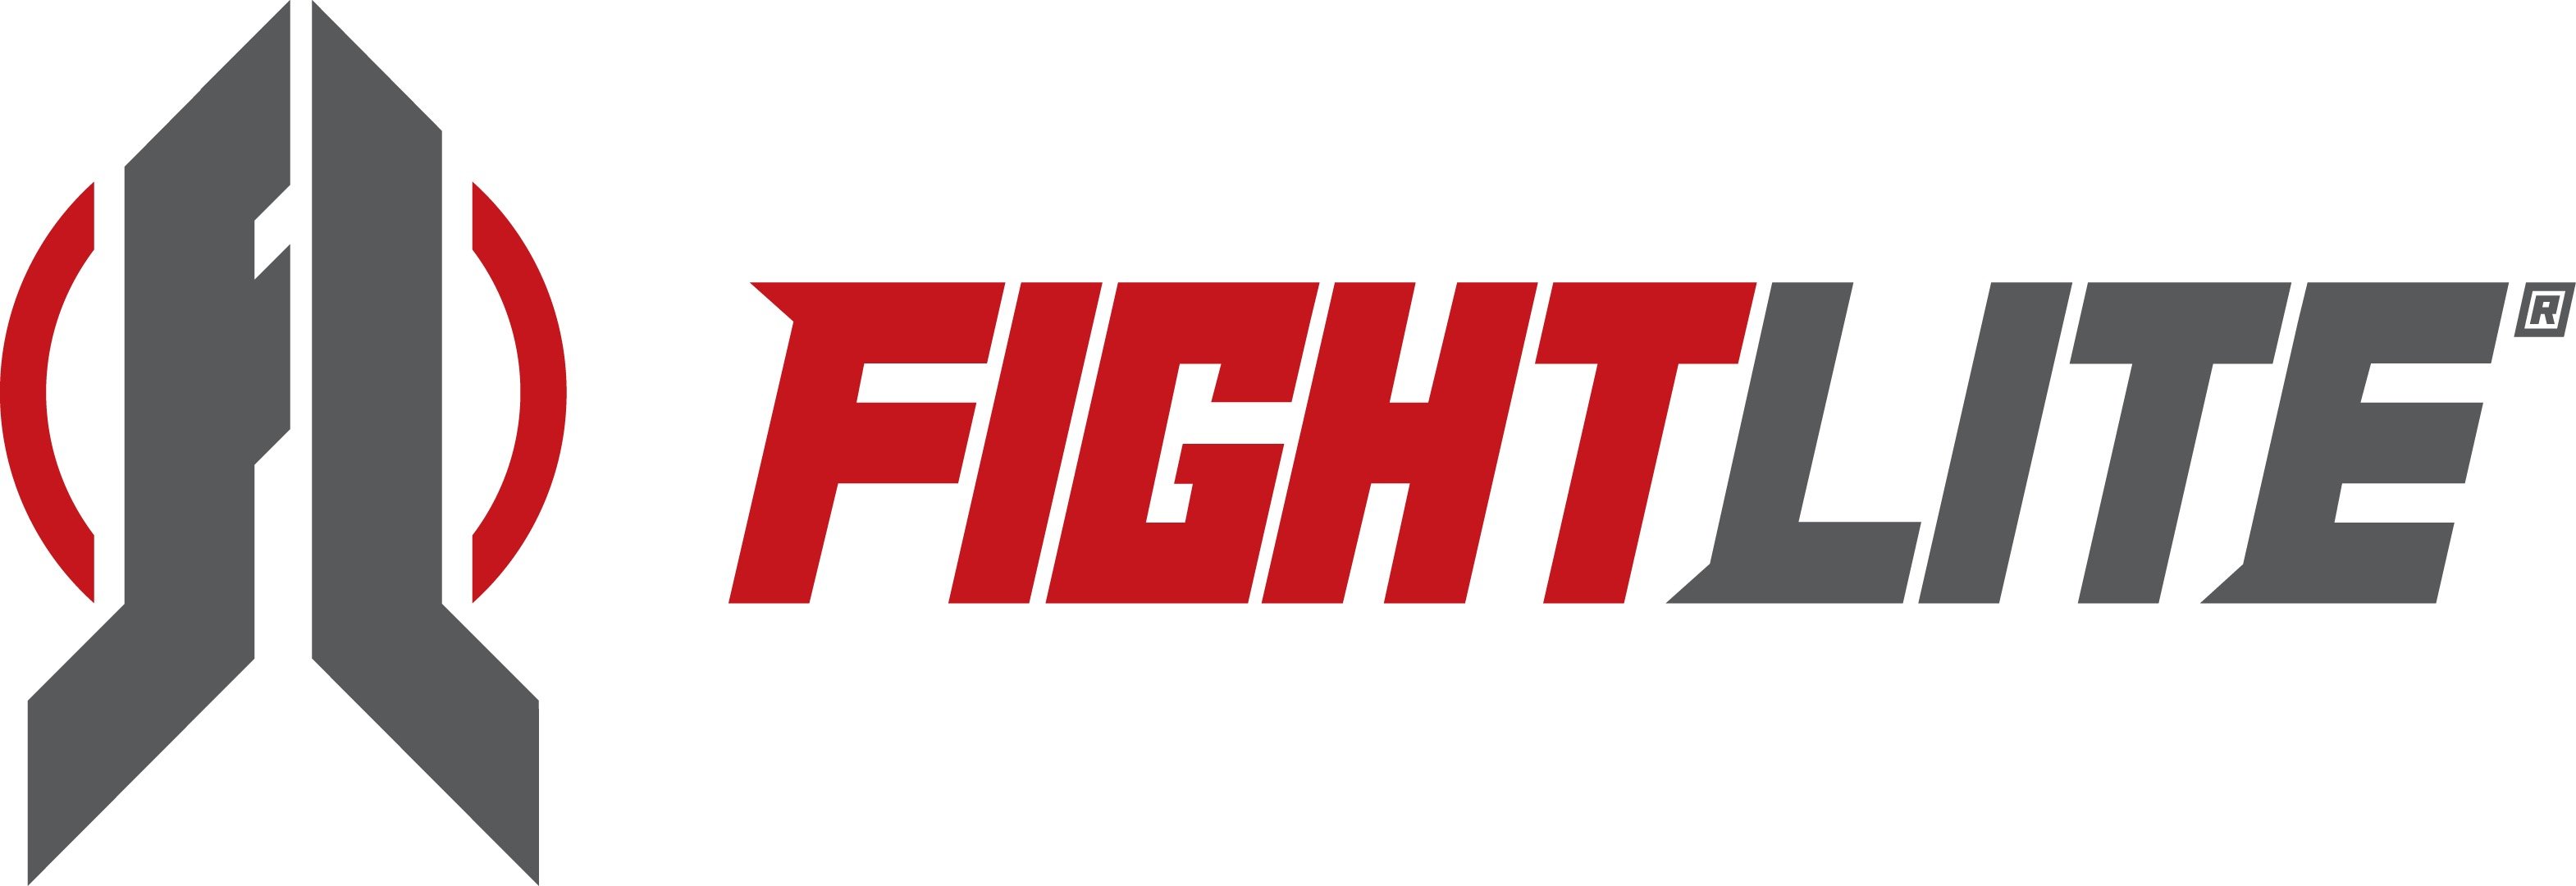 fightlite-logo